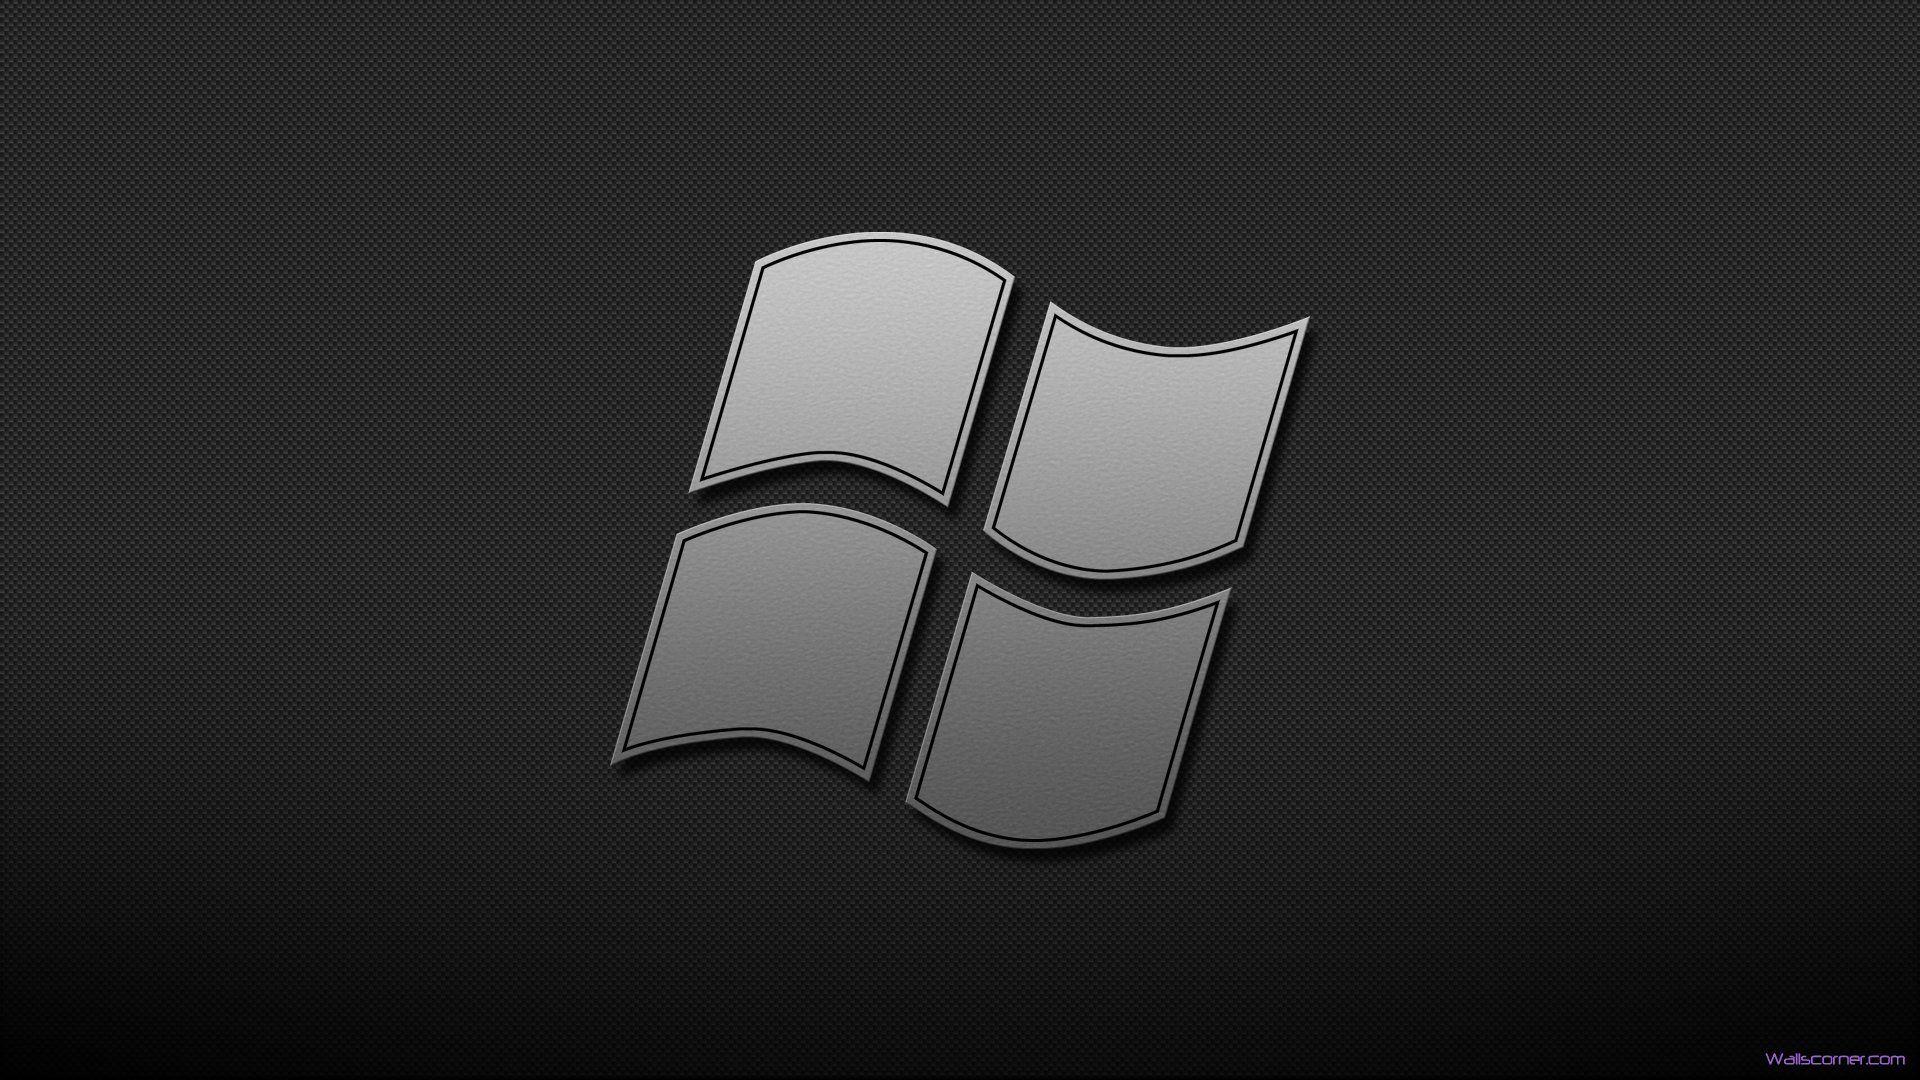 Black and White Windows Logo - Windows Logo Wallpapers - Wallpaper Cave